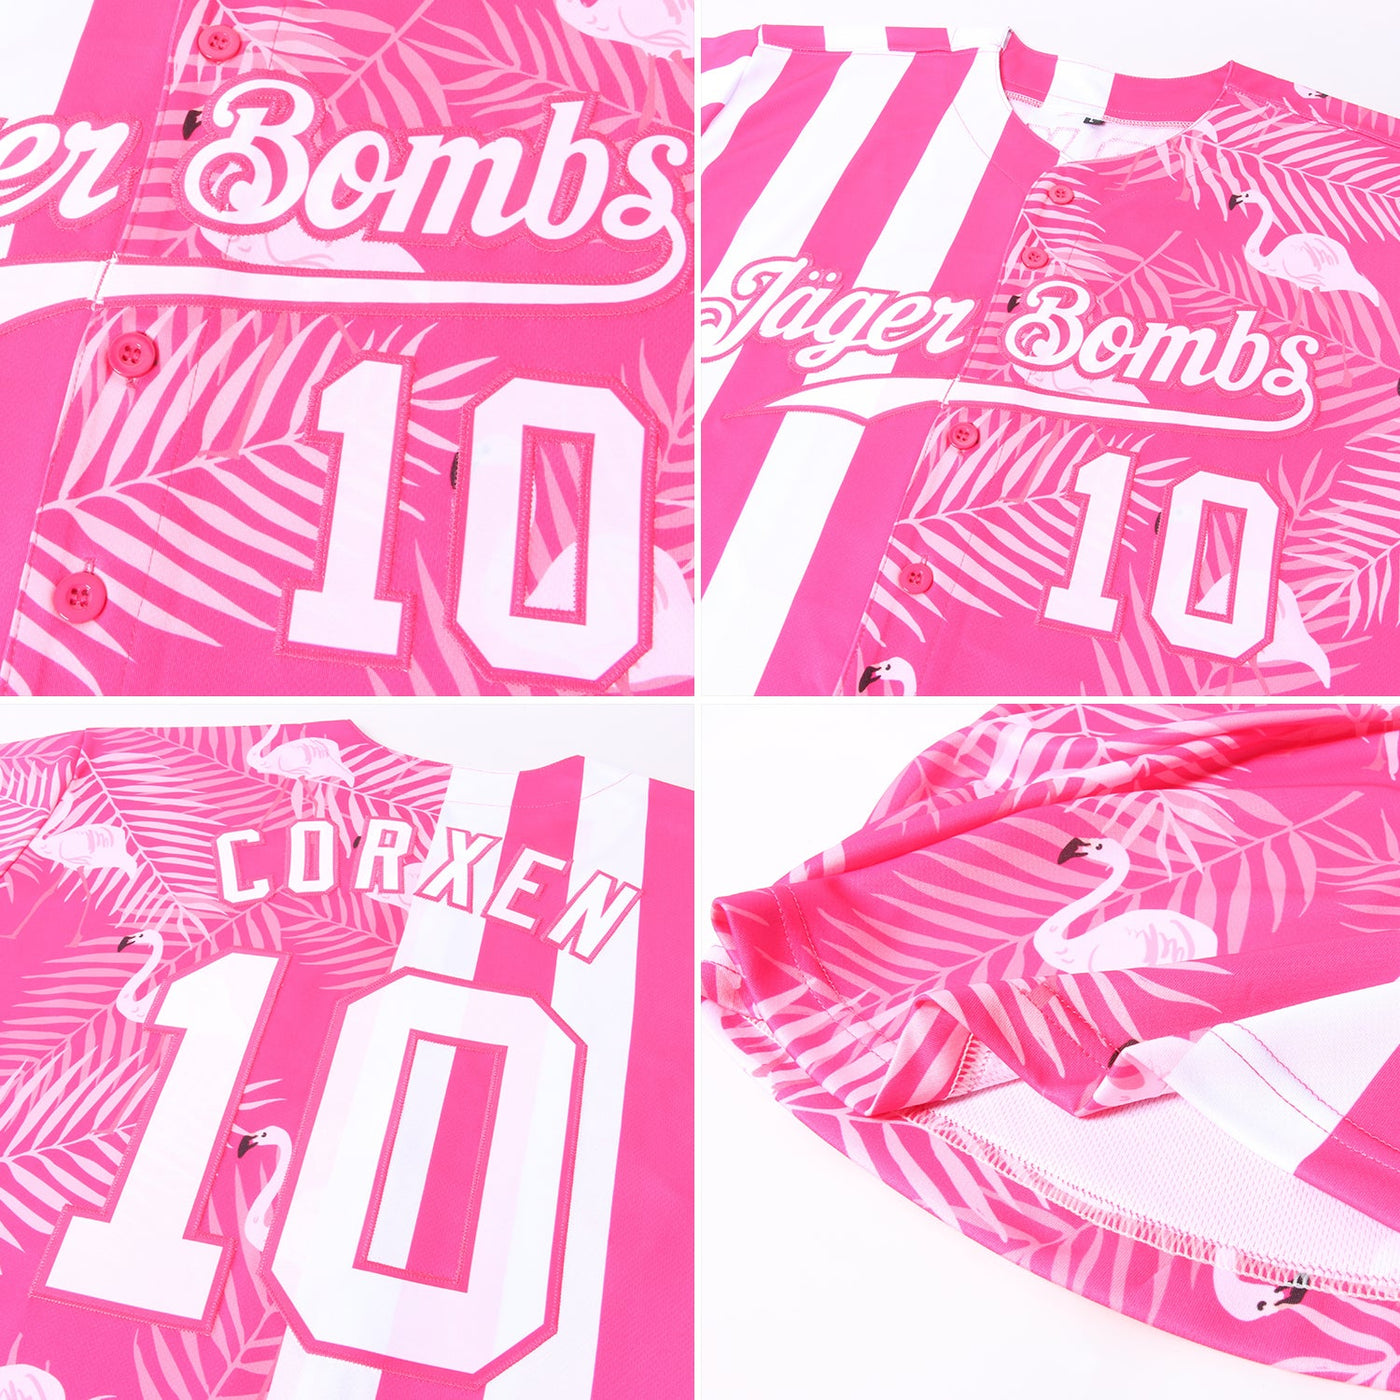 Custom Pink White 3D Pattern Design Tropical Famingo Authentic Baseball Jersey - Owls Matrix LTD